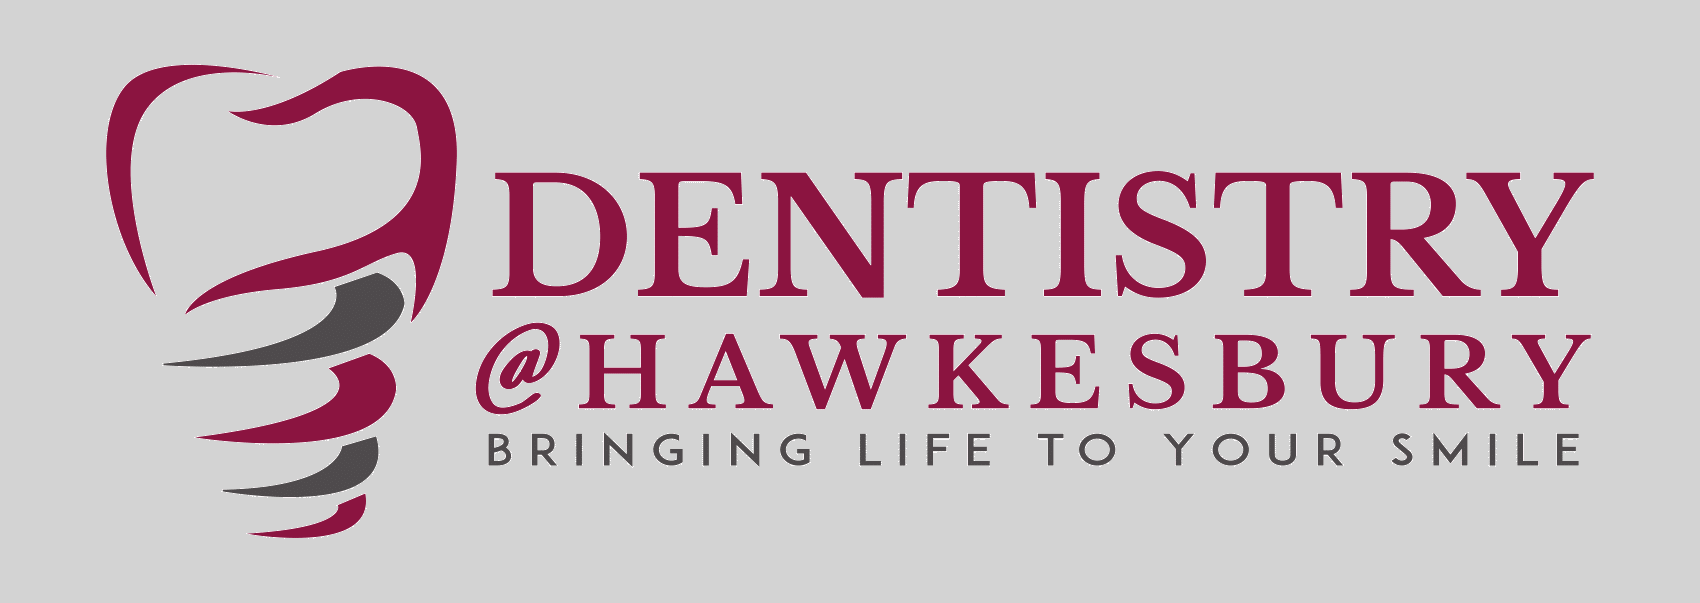 Dentist Hawkesbury, Dental Services Dentistry 